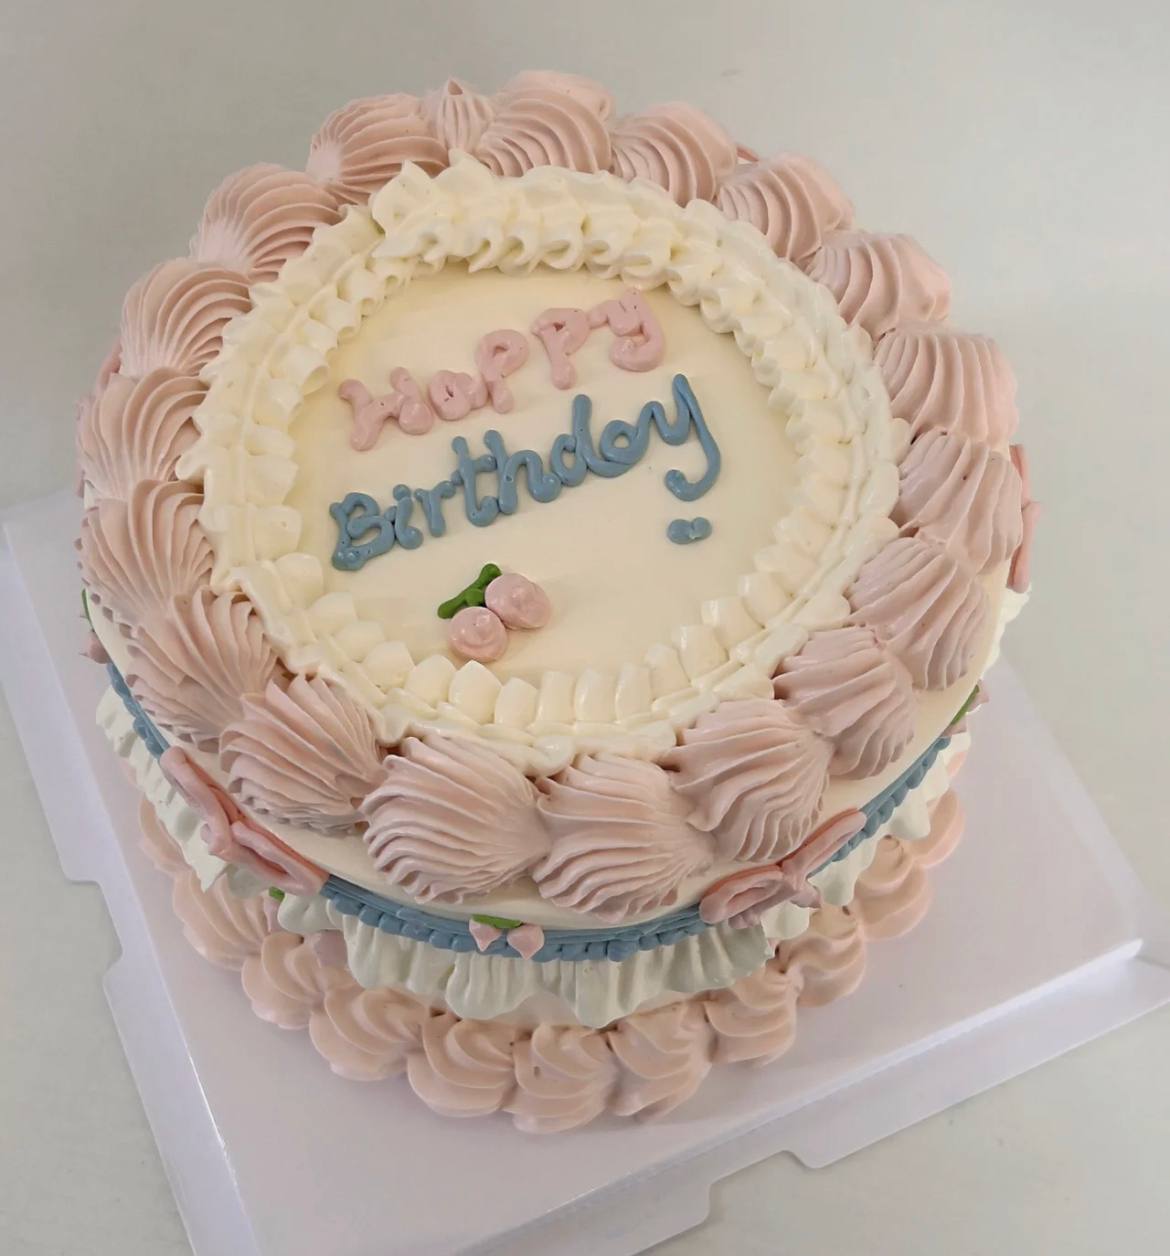 Simple Design Blue Birthday Cake | bakehoney.com